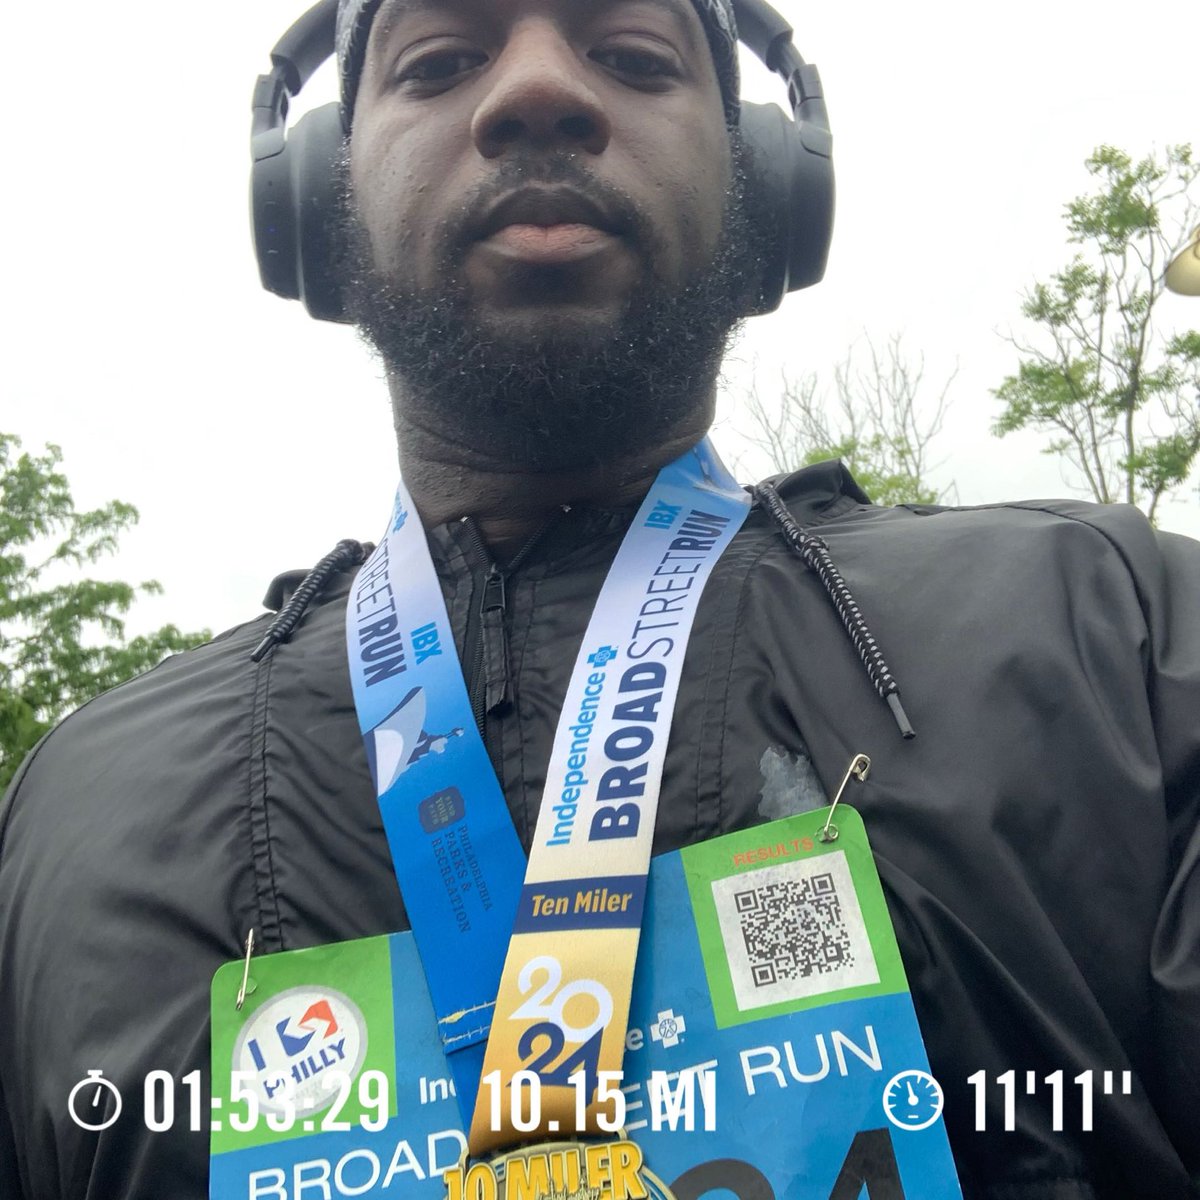 Made it thru the marathon #BroadStreetRun completed🏁